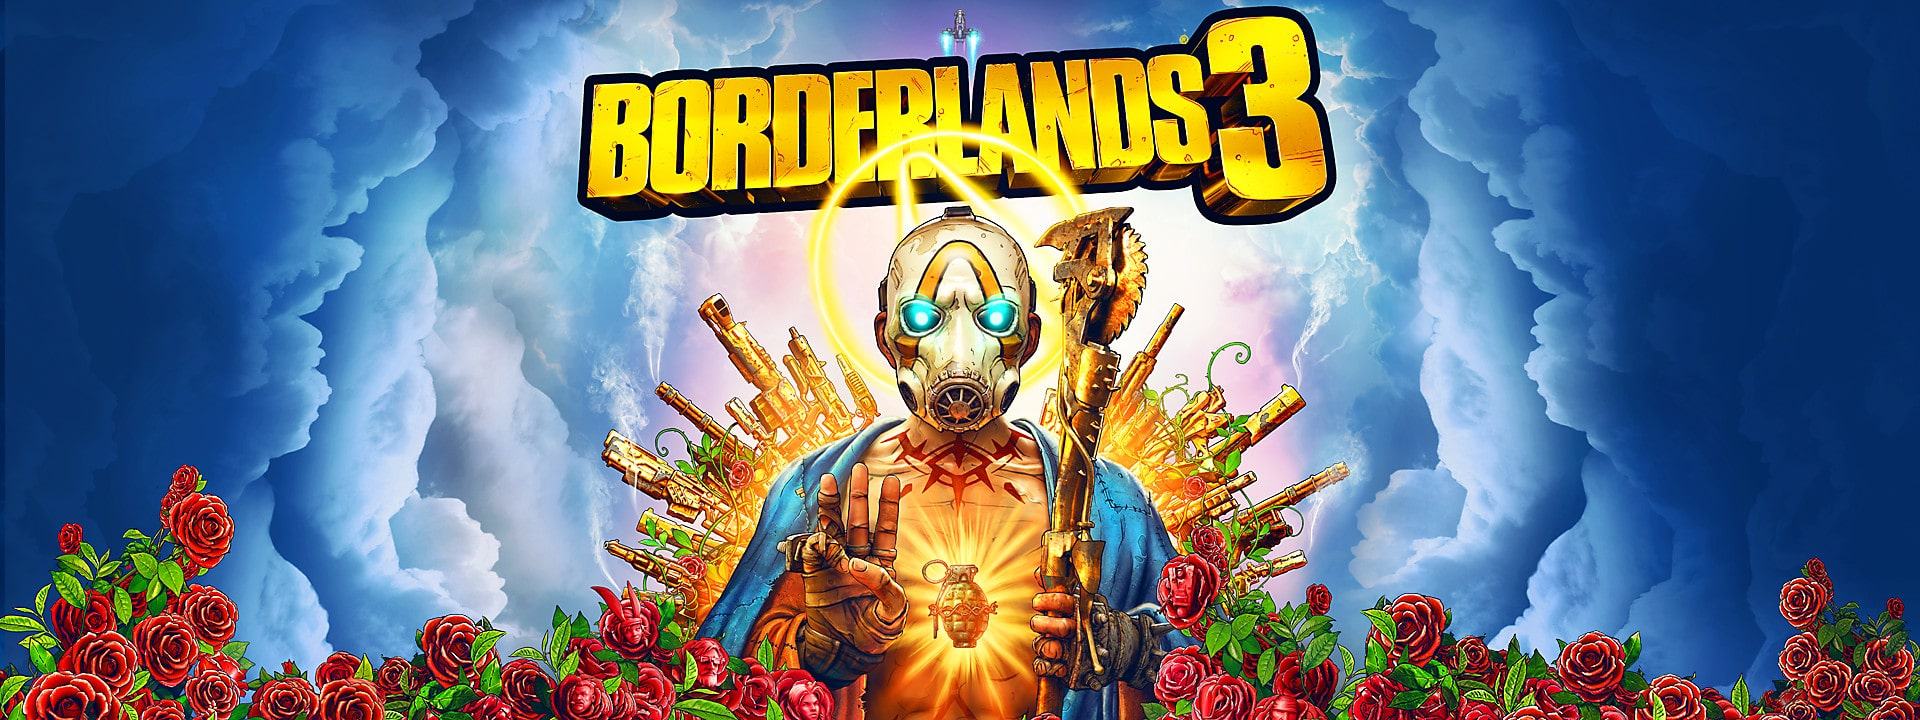 Il film su Borderlands è ufficiale, dirigerà Eli Roth 4